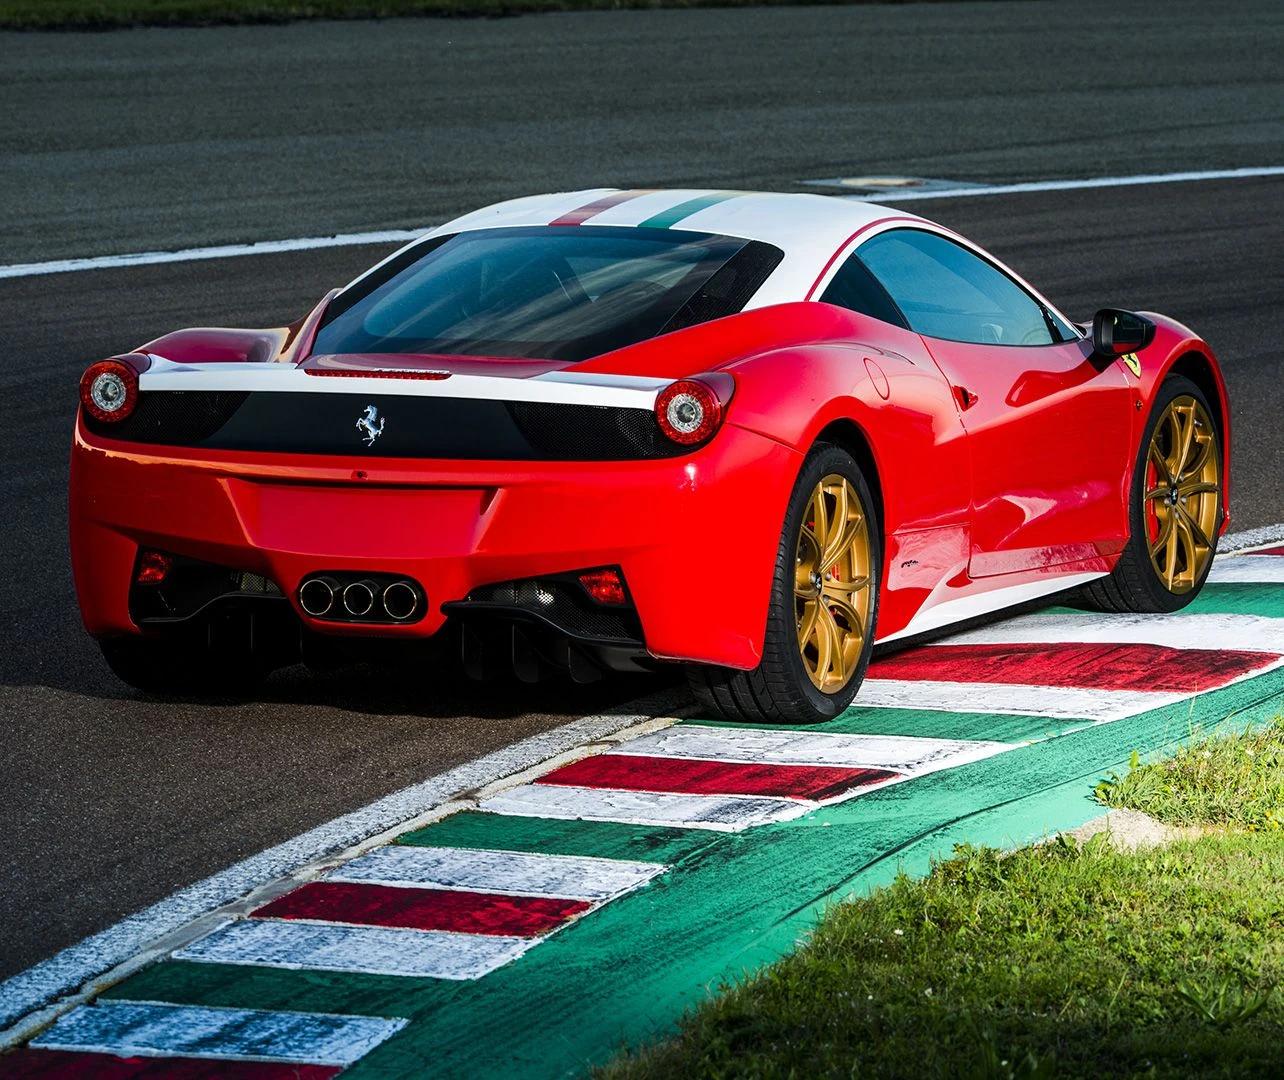 ferrari 4858 italia - Cuánto cuesta un 458 Italia Ferrari